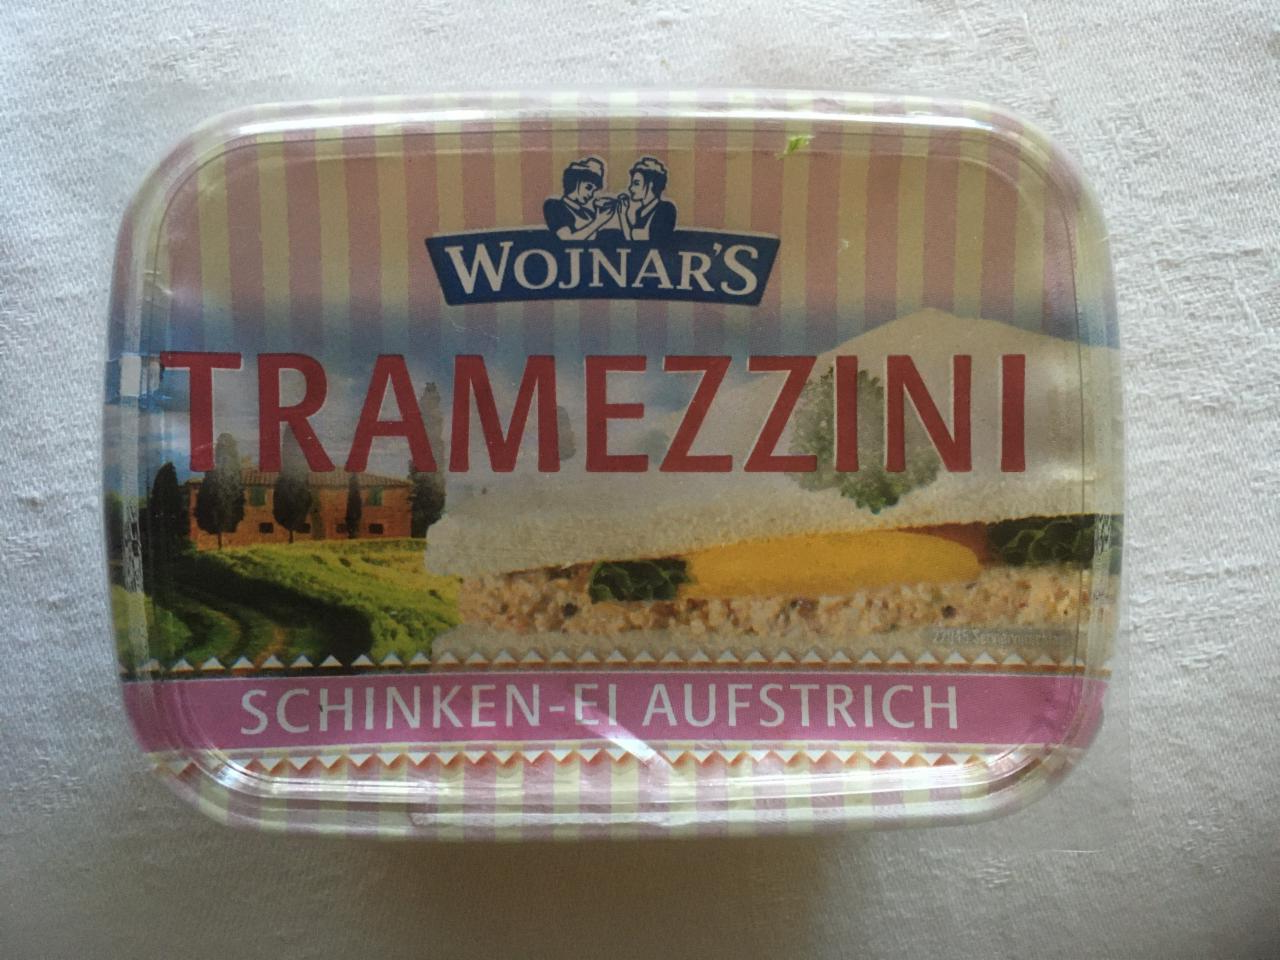 Fotografie - Tramezzini Schninken-Ei Aufstrich Wojnar's